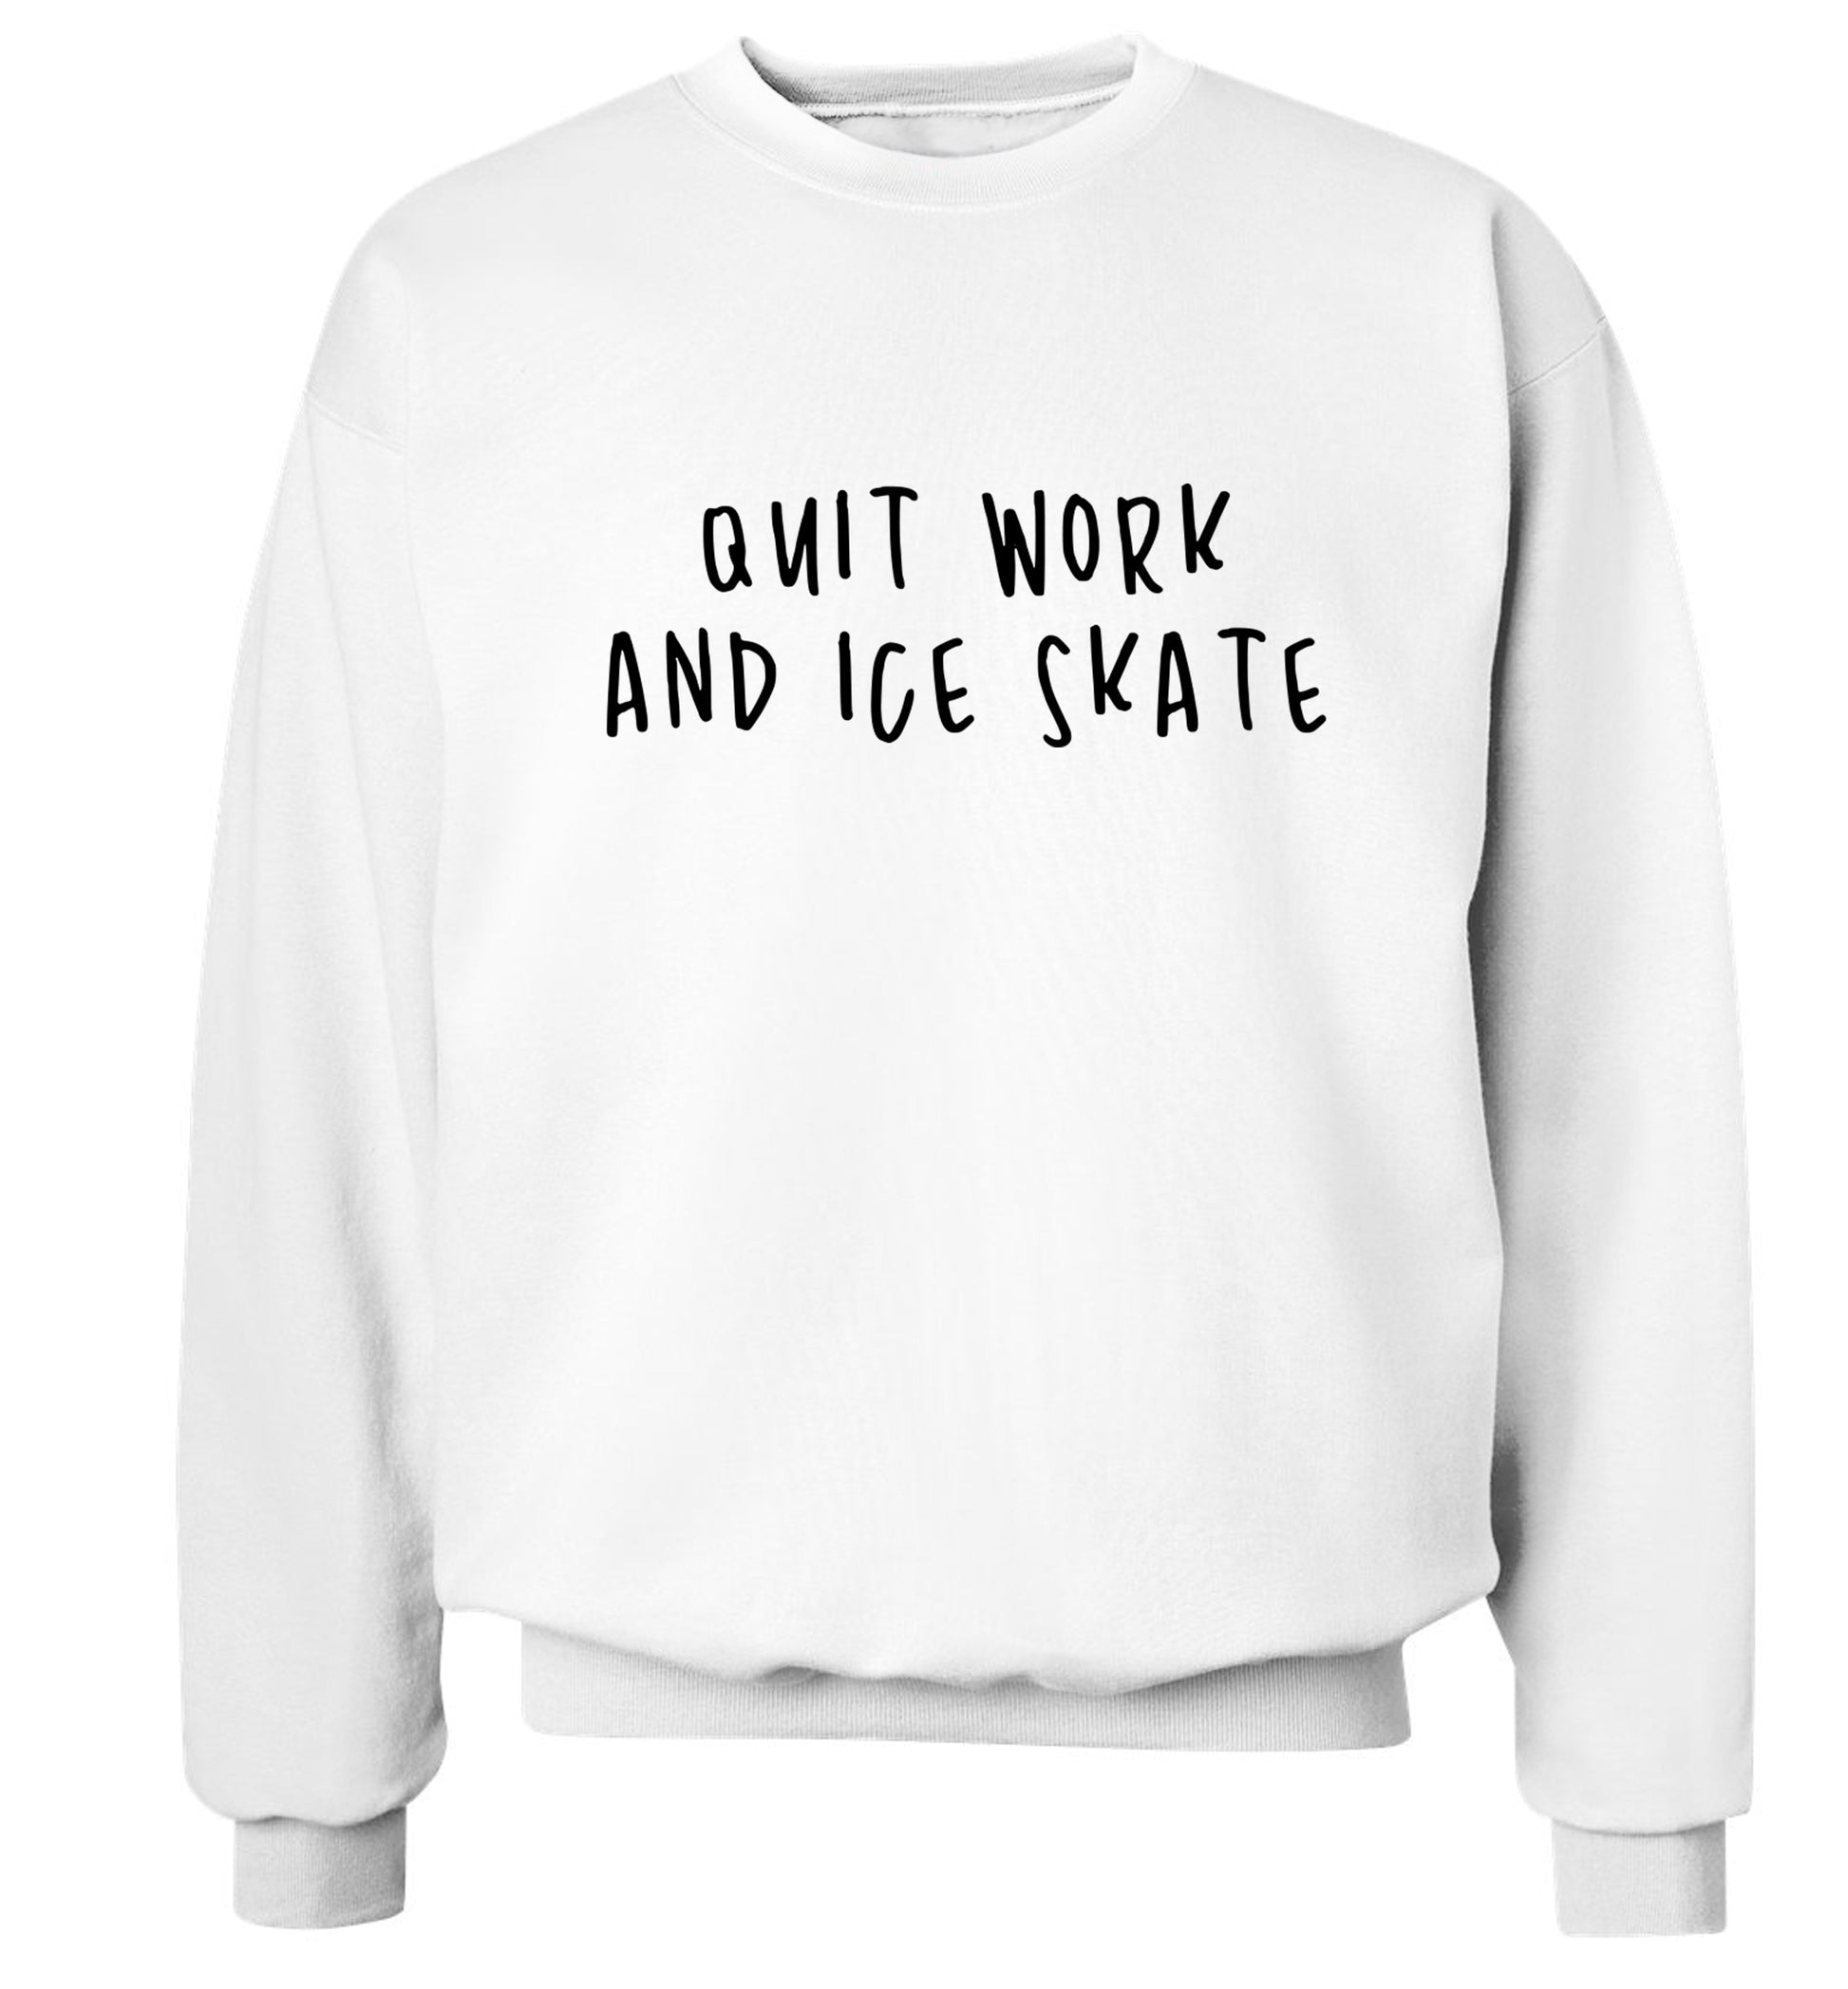 Quit work ice skate Adult's unisexwhite Sweater 2XL